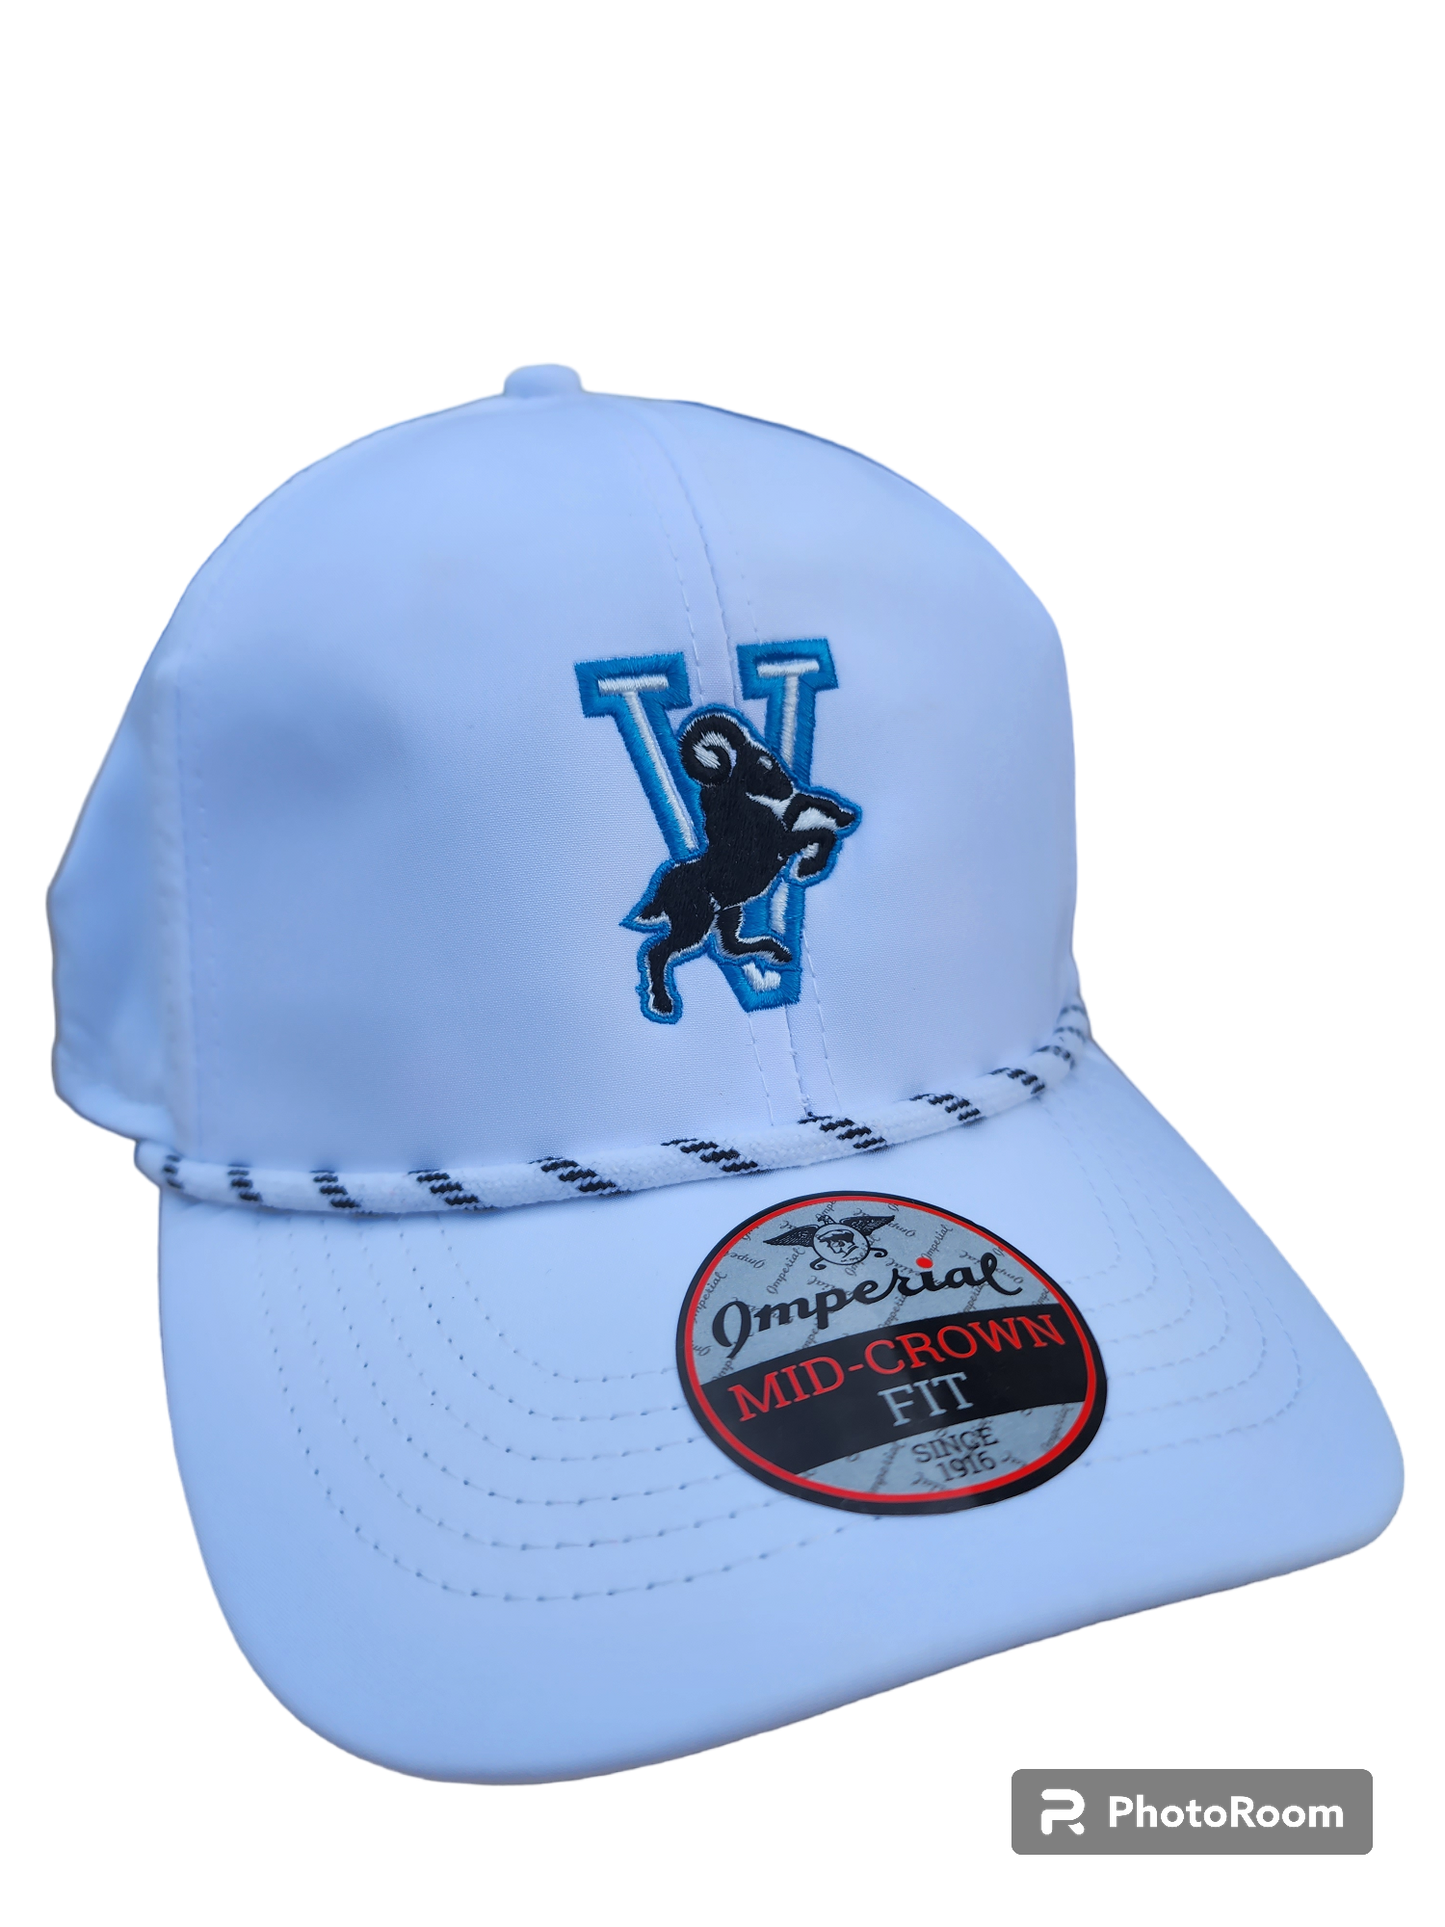 V athletic logo Imperial mid-crown hat